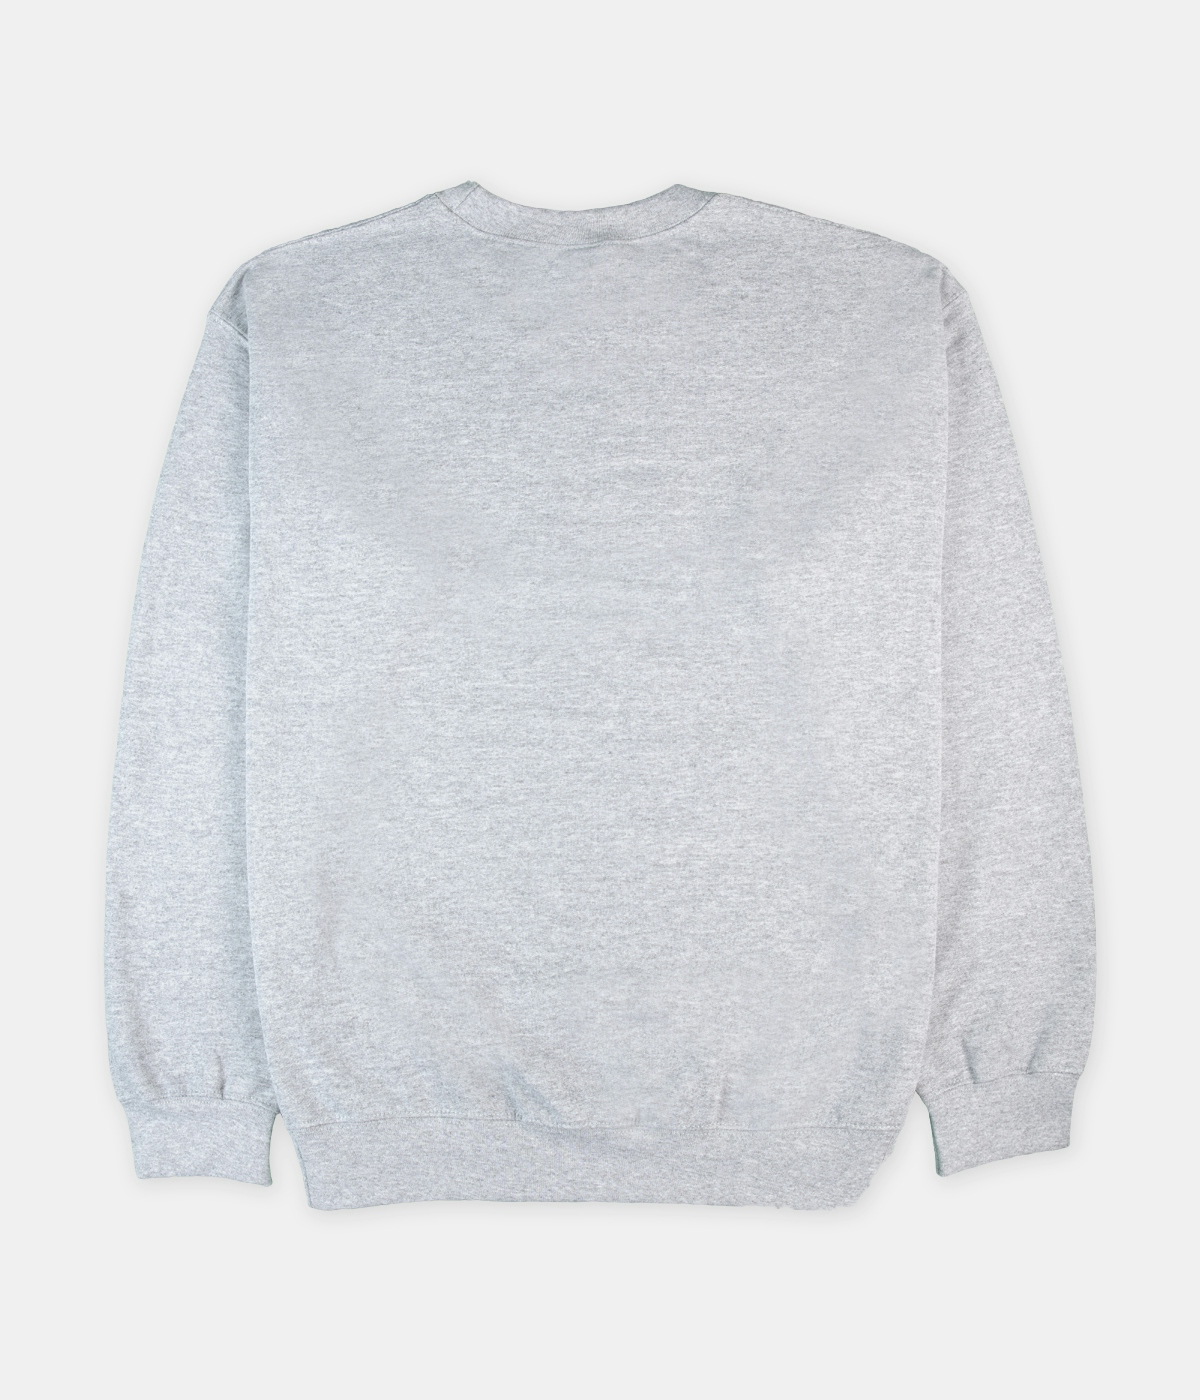 Gizmo Graf Crewneck Sweater Grey Melange 2